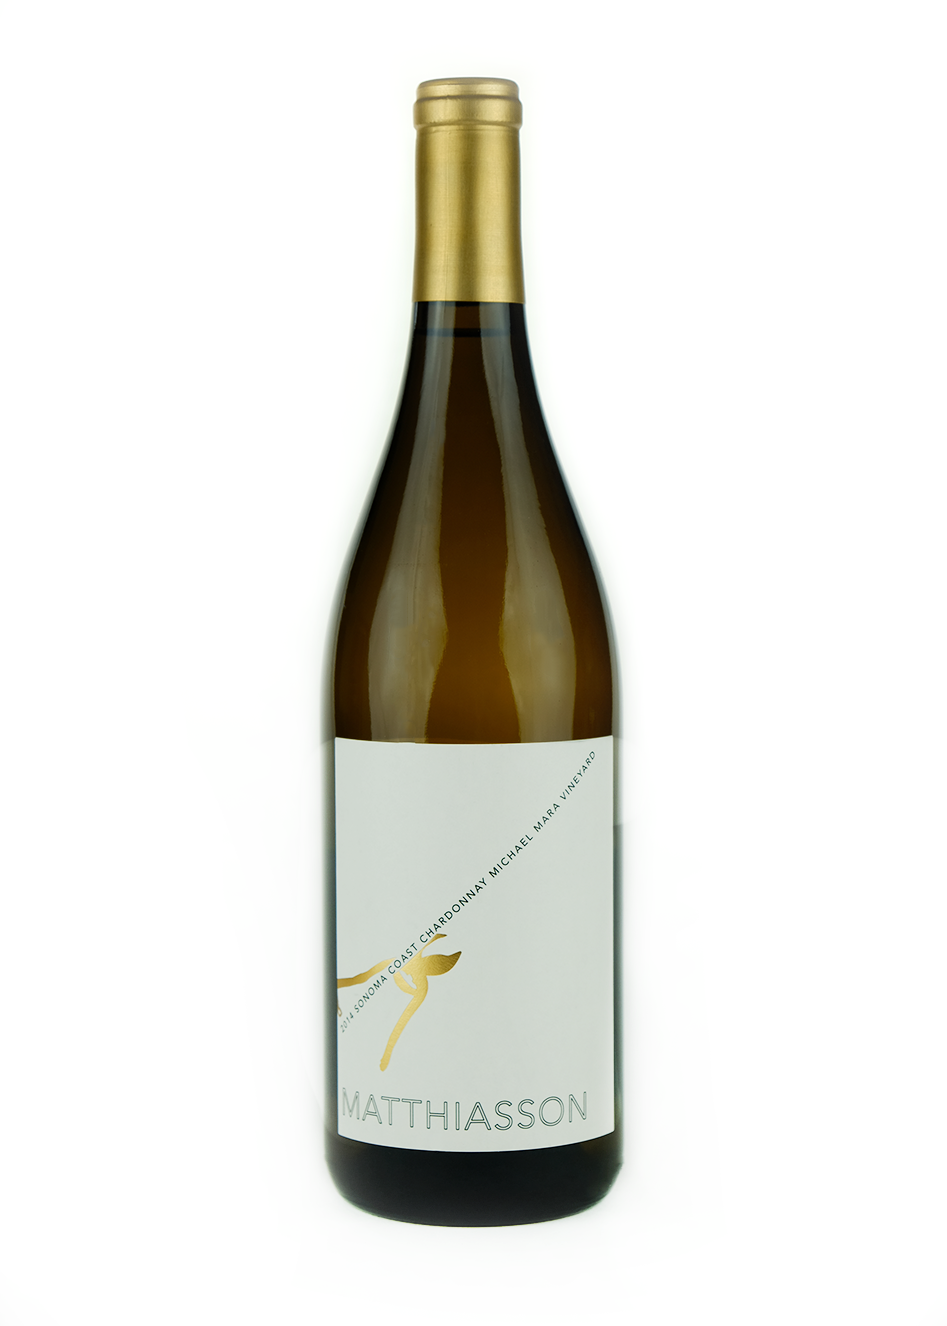 Matthiasson 2014 Chardonnay ‘Michael Mara Vineyard’